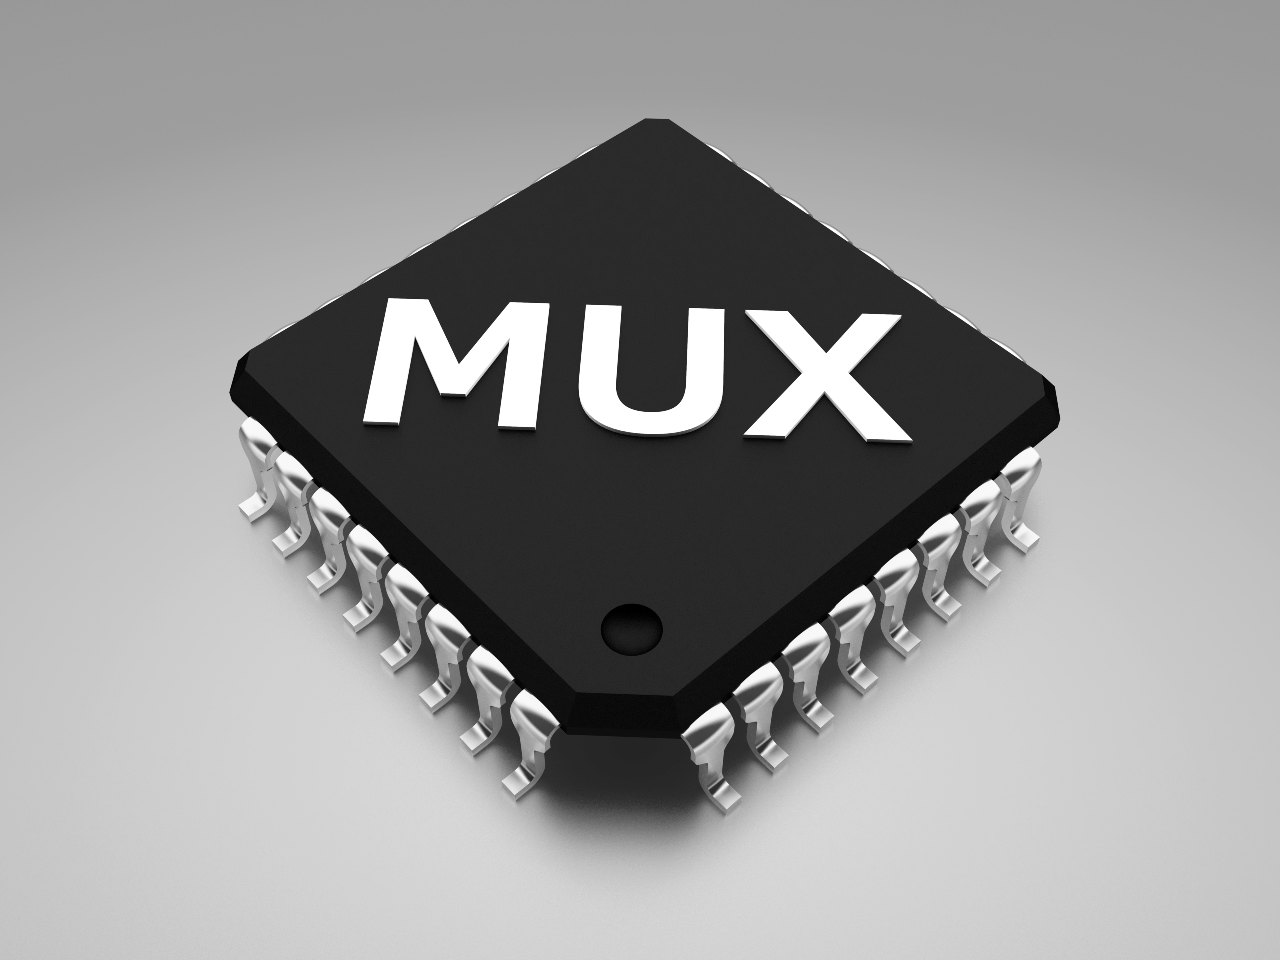 Mux (Adobe Stock)